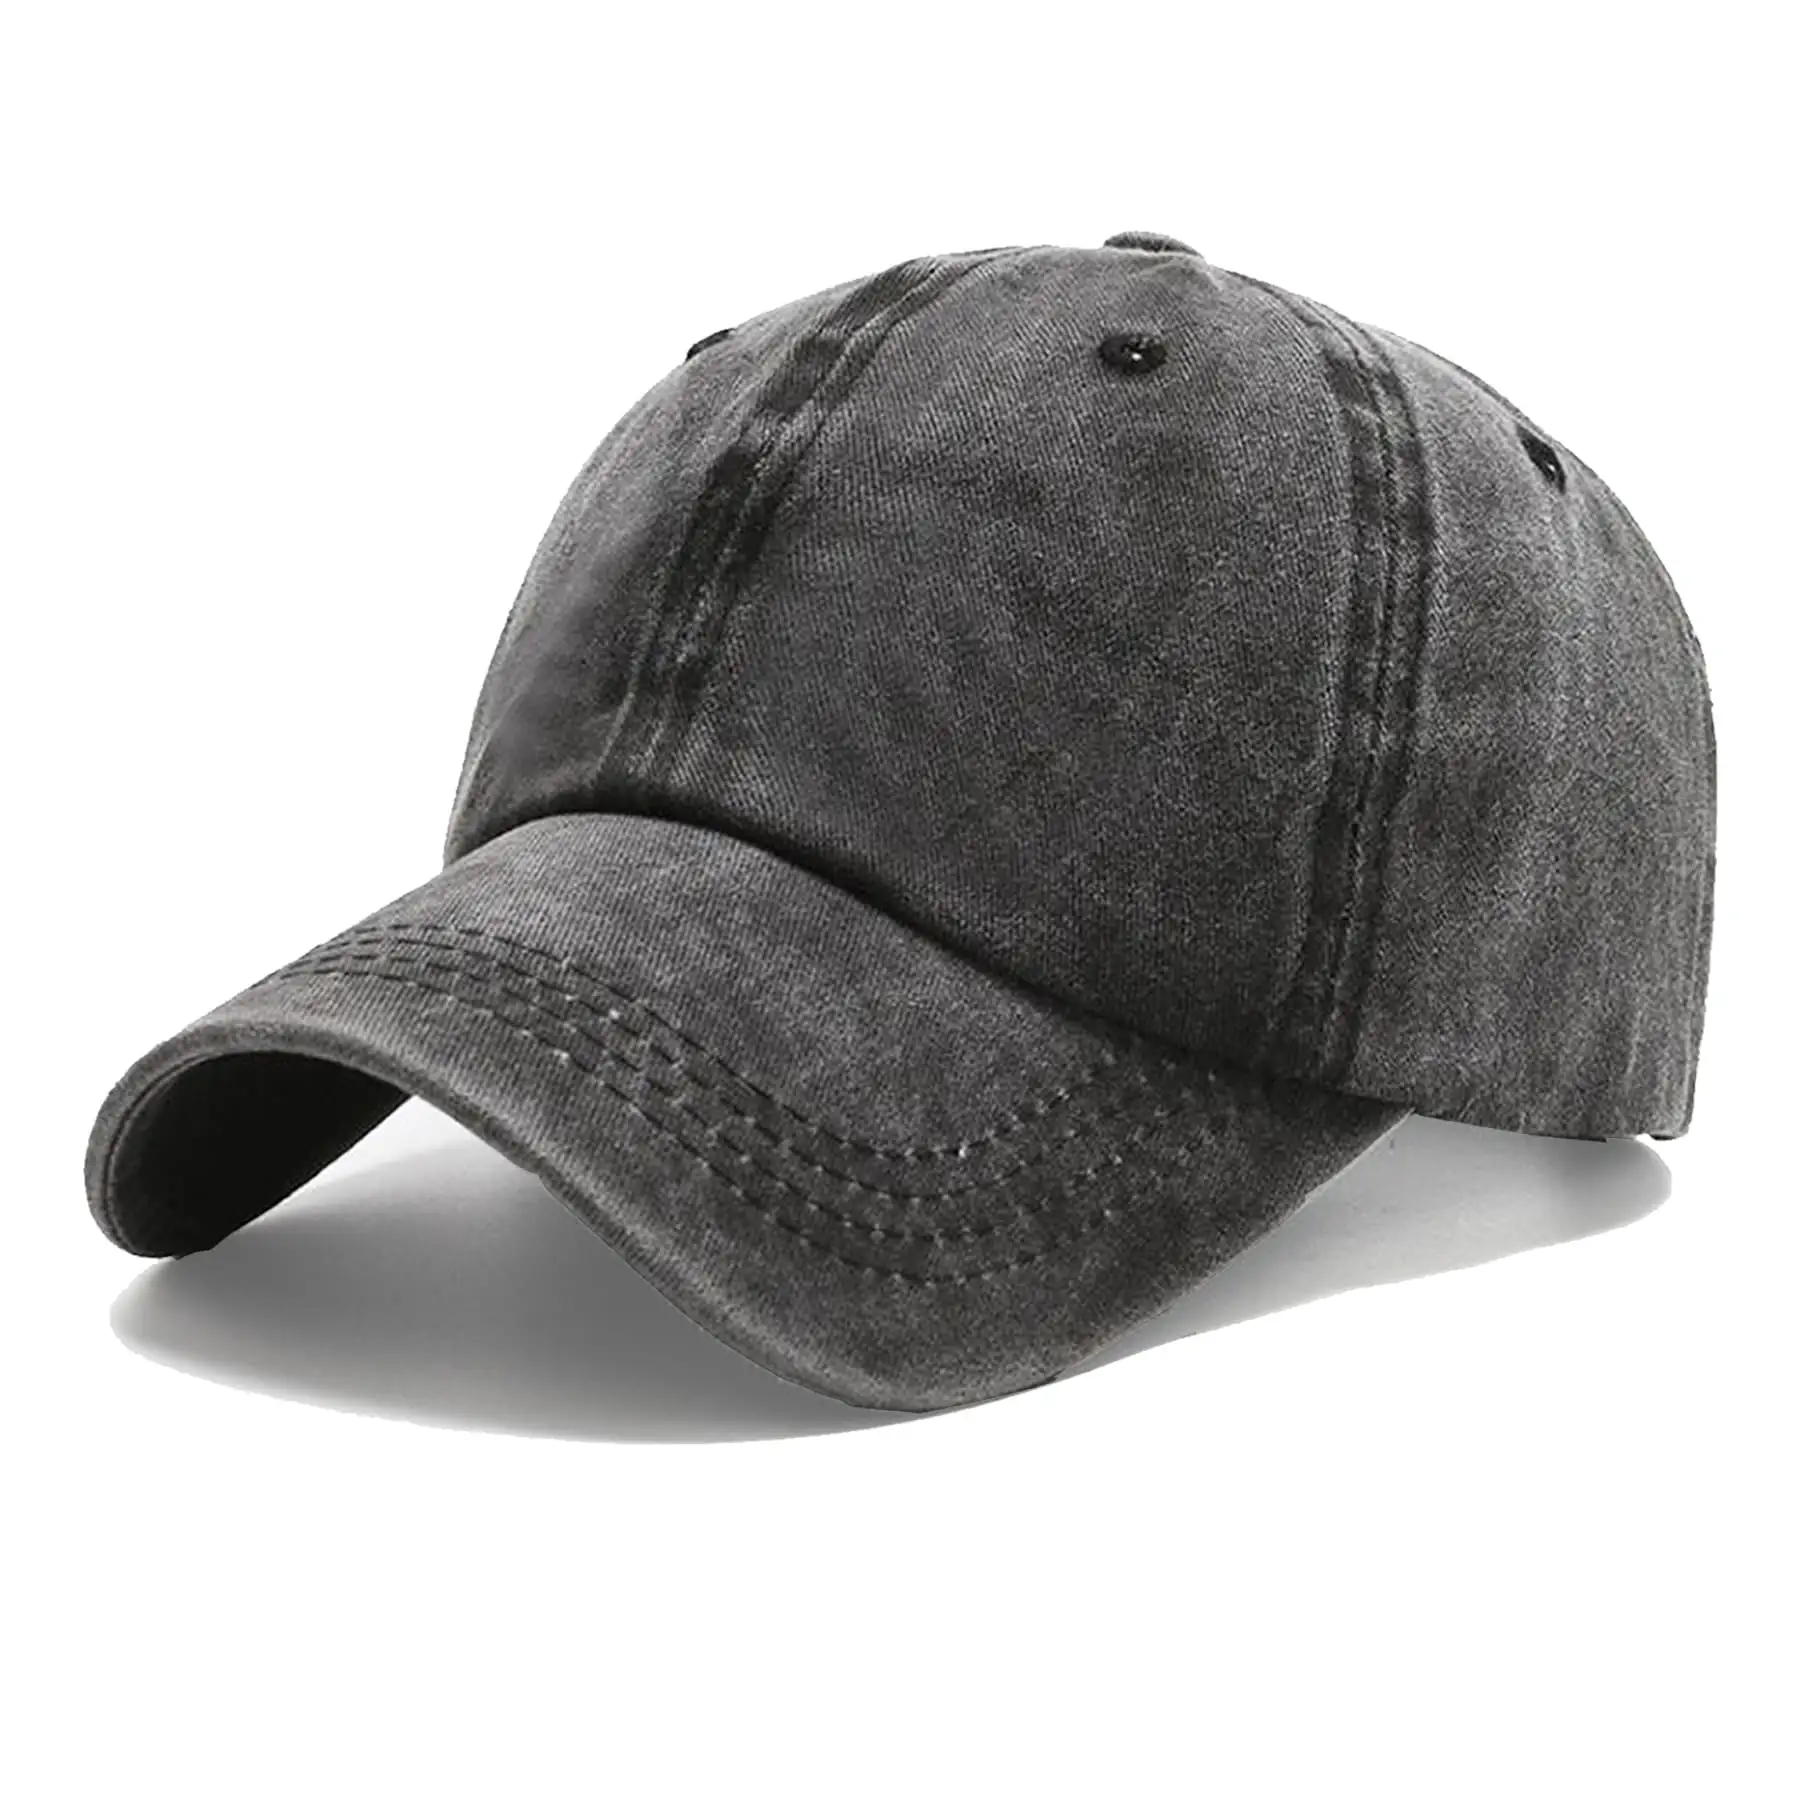 Caliente Logotipo de diseño personalizado 3D bordado en blanco gorras de golf para hombres gorras deportivas al por mayor Gorras Casual Plain Golf gorra de béisbol